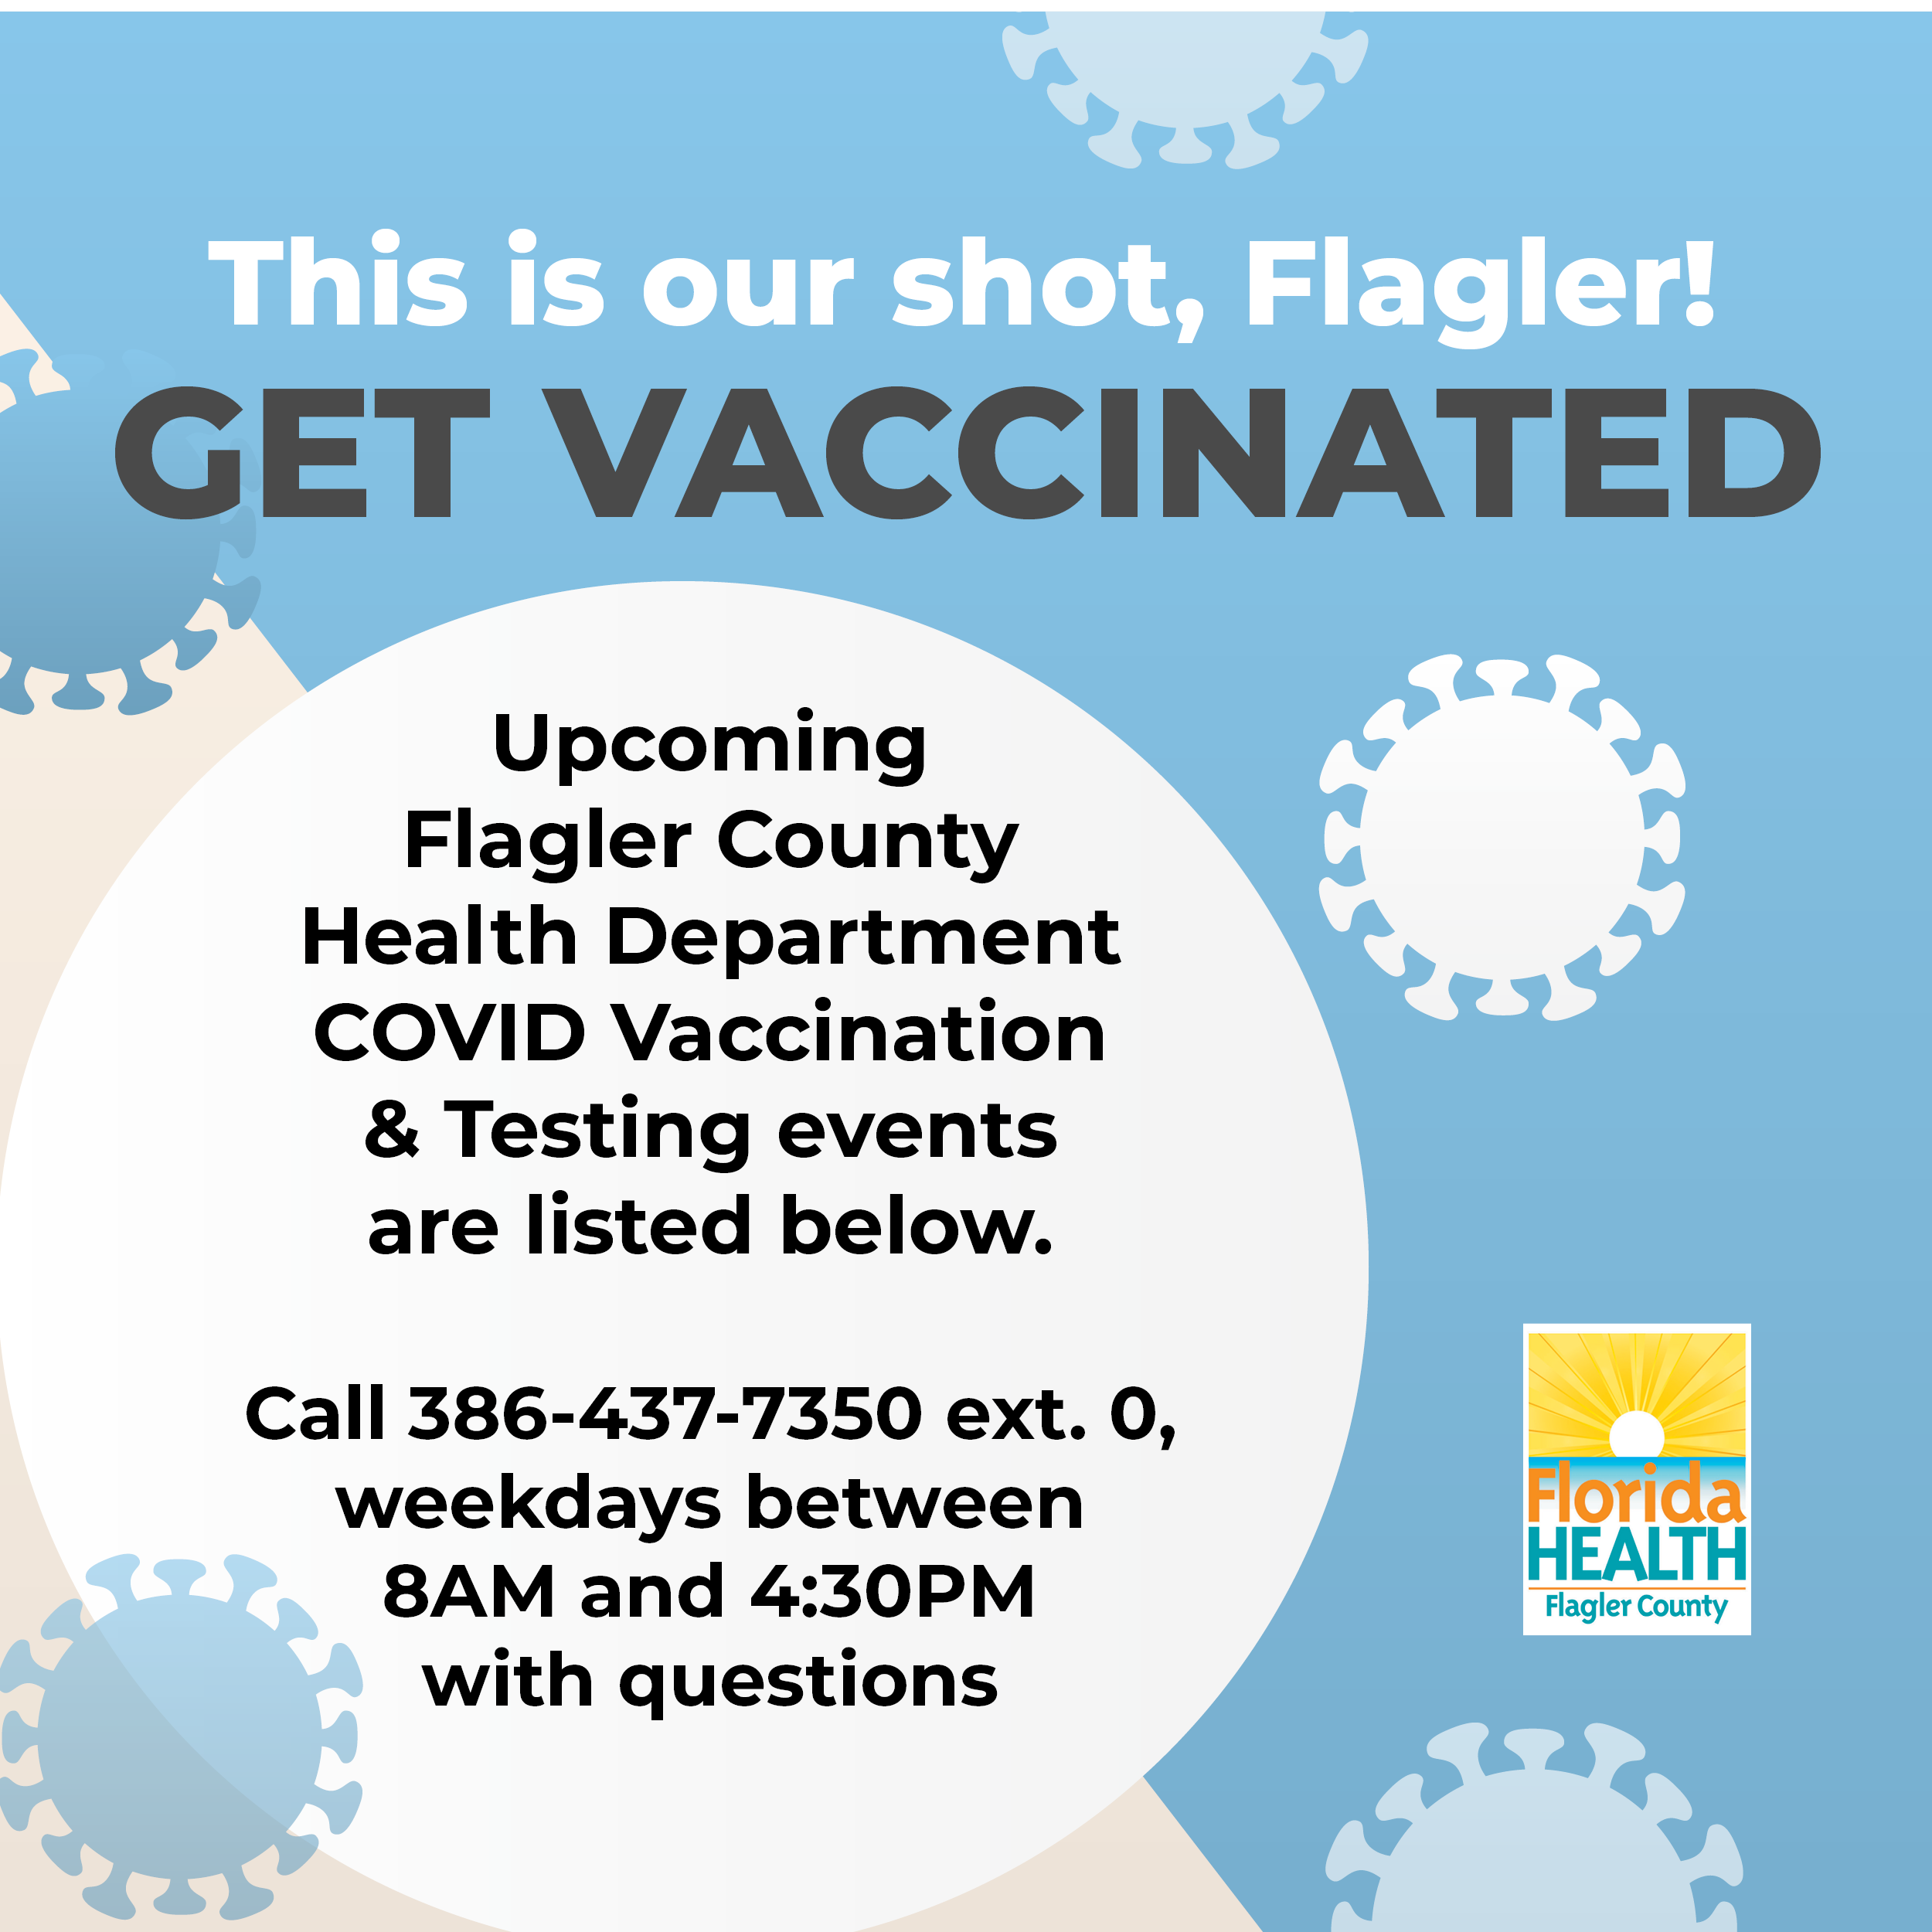 Florida Health Flagler County COVID-19 Vaccination Information 